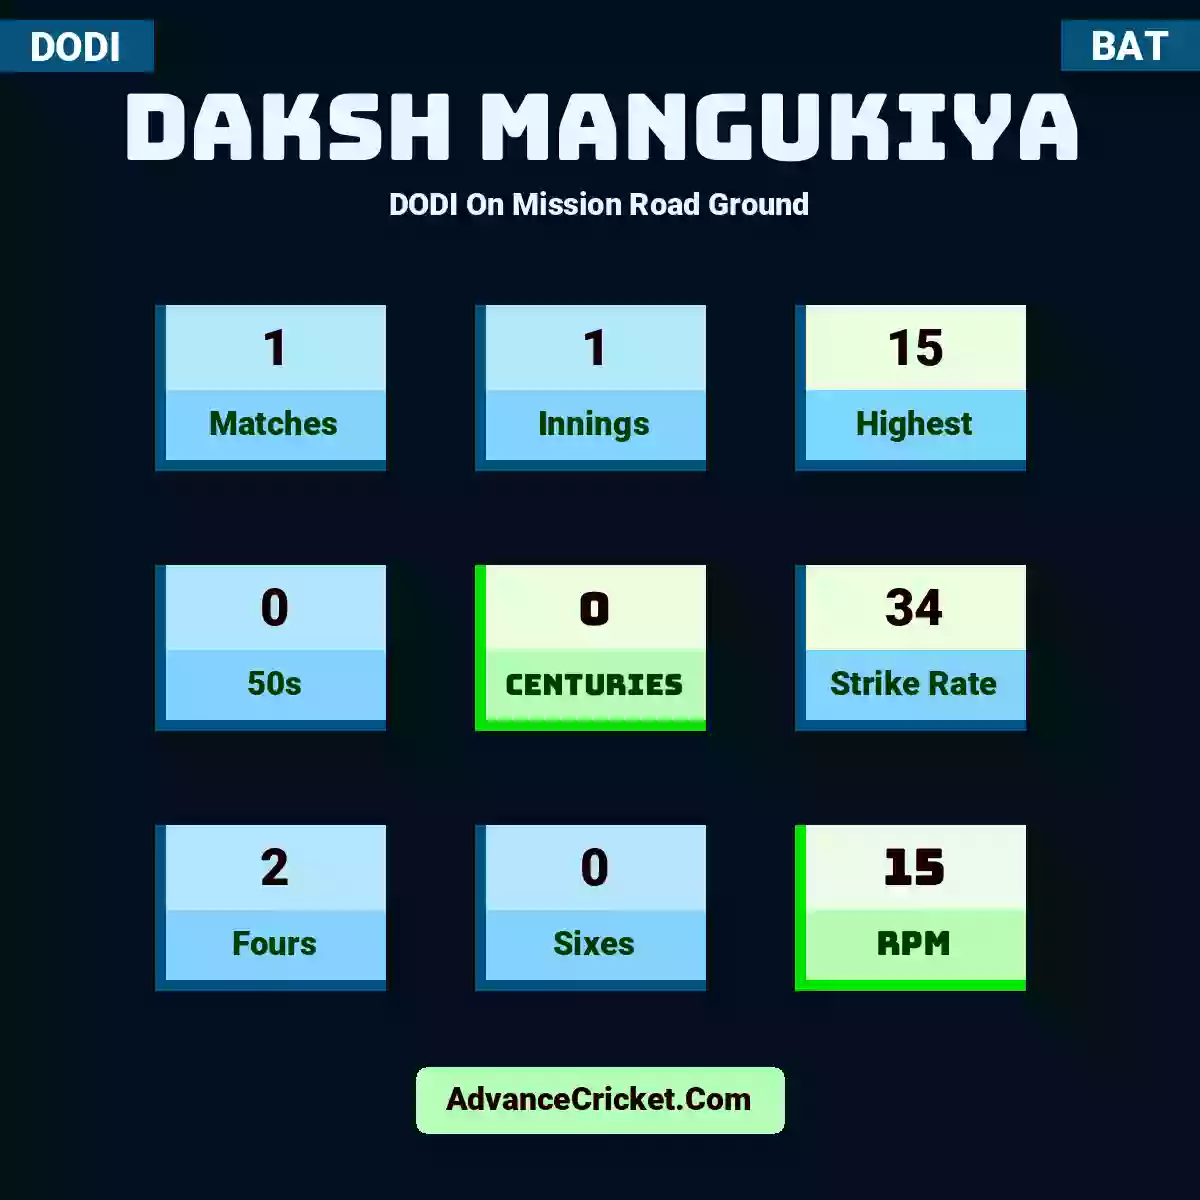 Daksh Mangukiya DODI  On Mission Road Ground, Daksh Mangukiya played 1 matches, scored 15 runs as highest, 0 half-centuries, and 0 centuries, with a strike rate of 34. D.Mangukiya hit 2 fours and 0 sixes, with an RPM of 15.